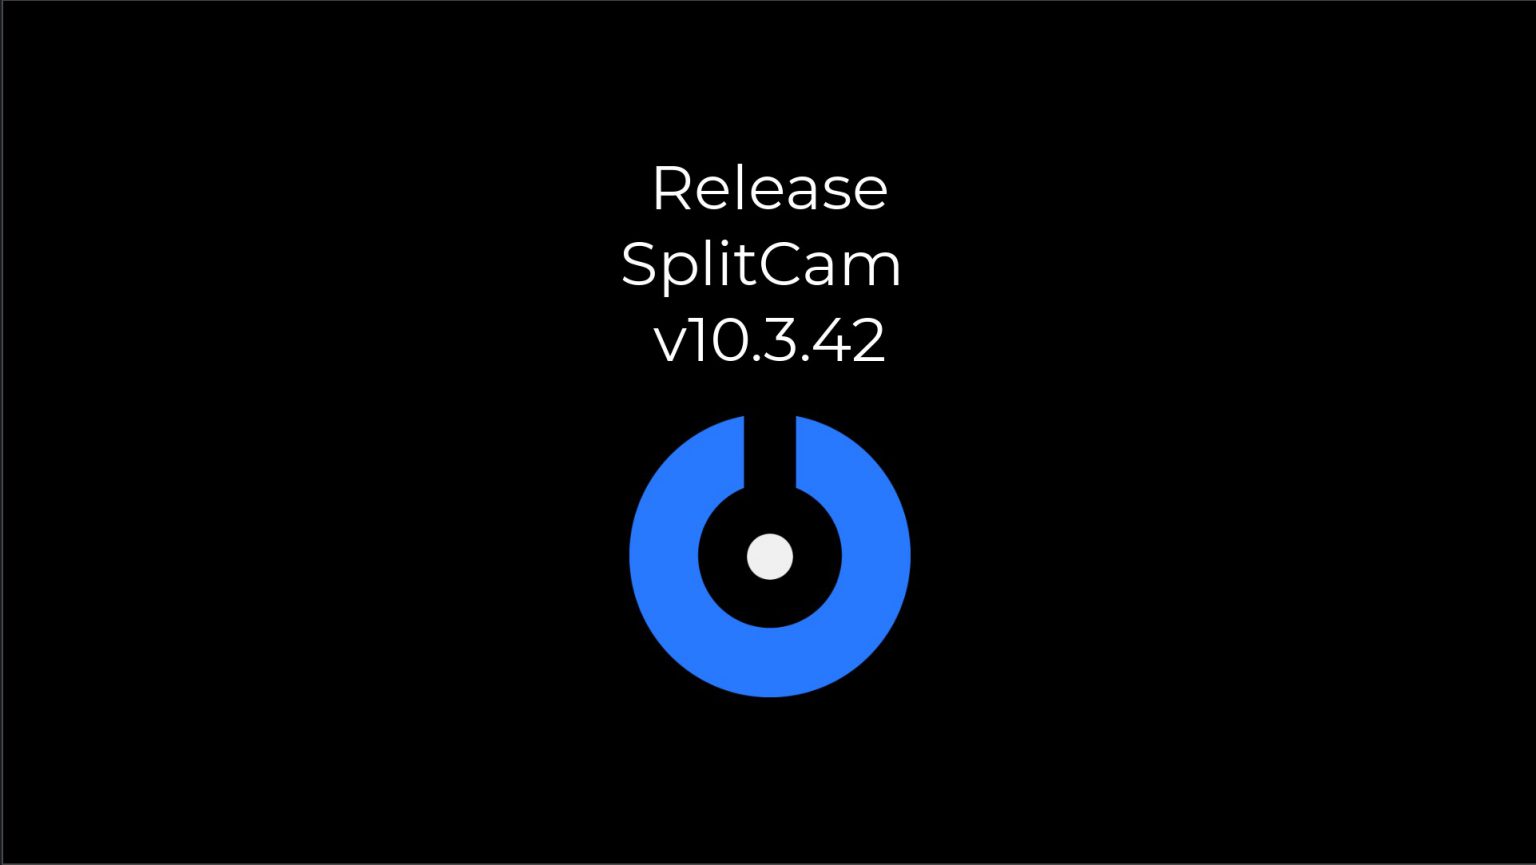 SplitCam 10.7.16 instal the new